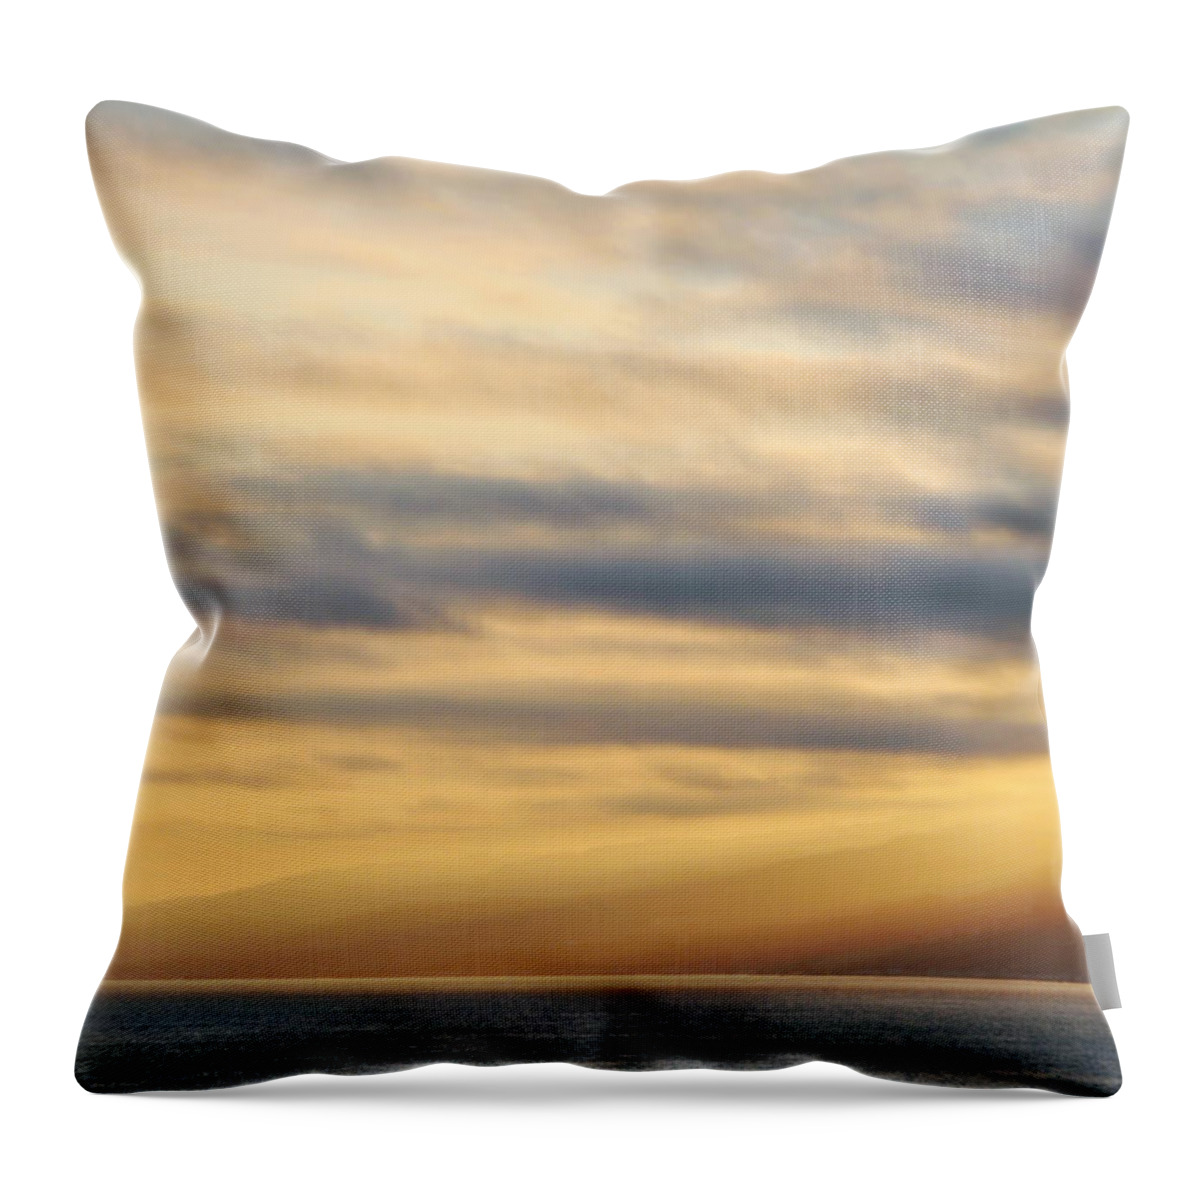 Santa Monica Throw Pillow featuring the photograph Santa Monica Golden Hour Sunburst by Kyle Hanson